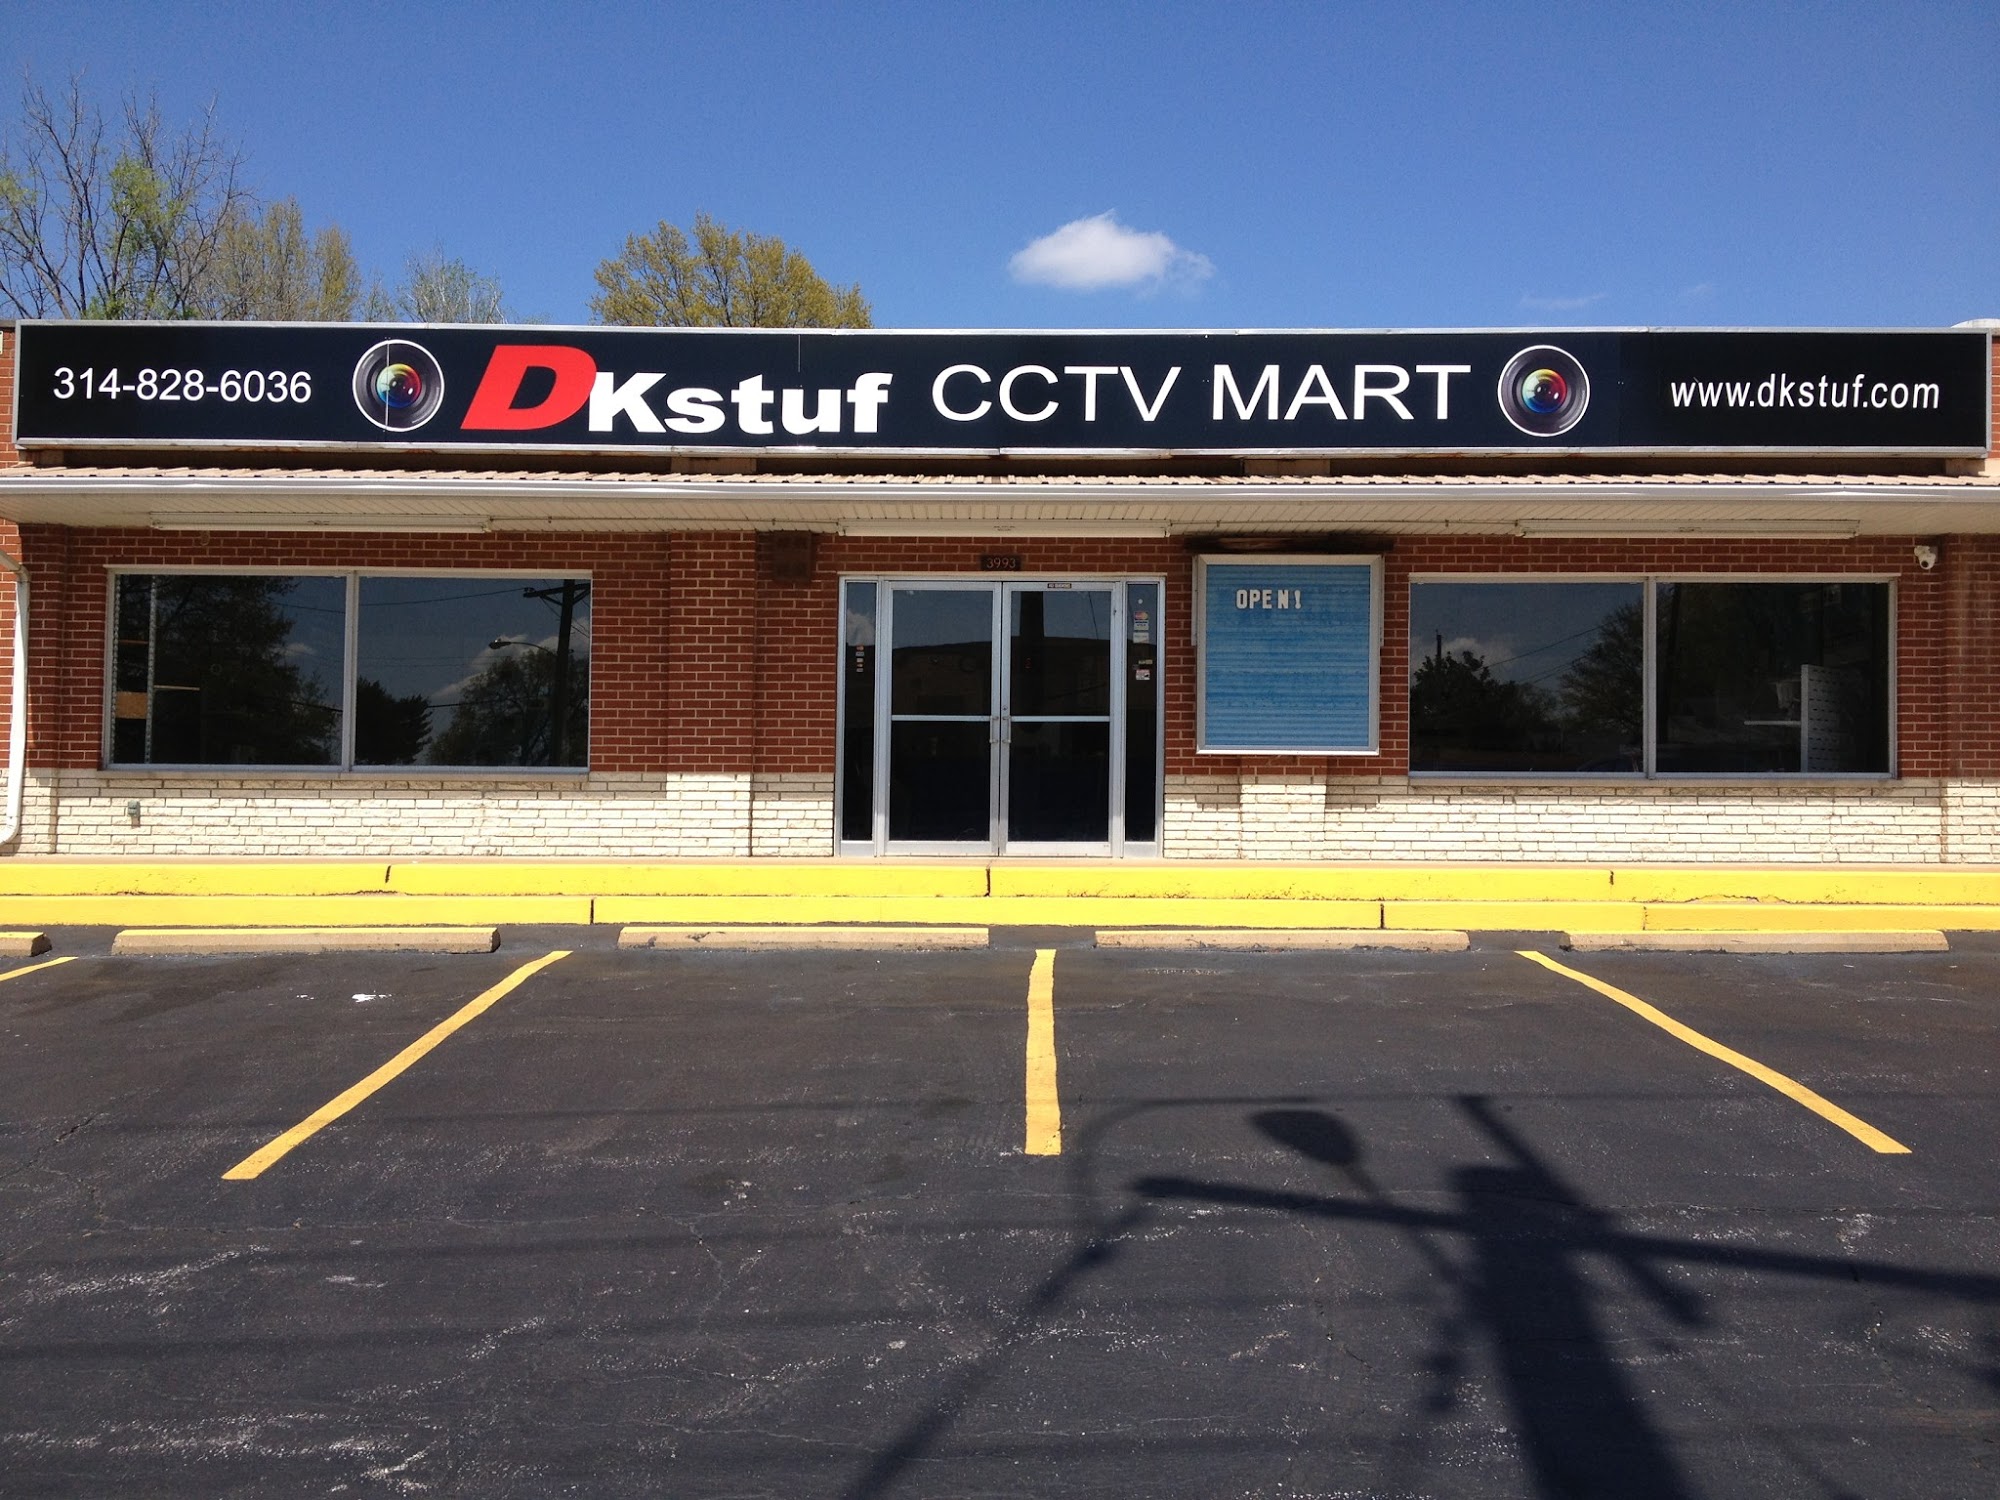 DKstuf CCTV Mart